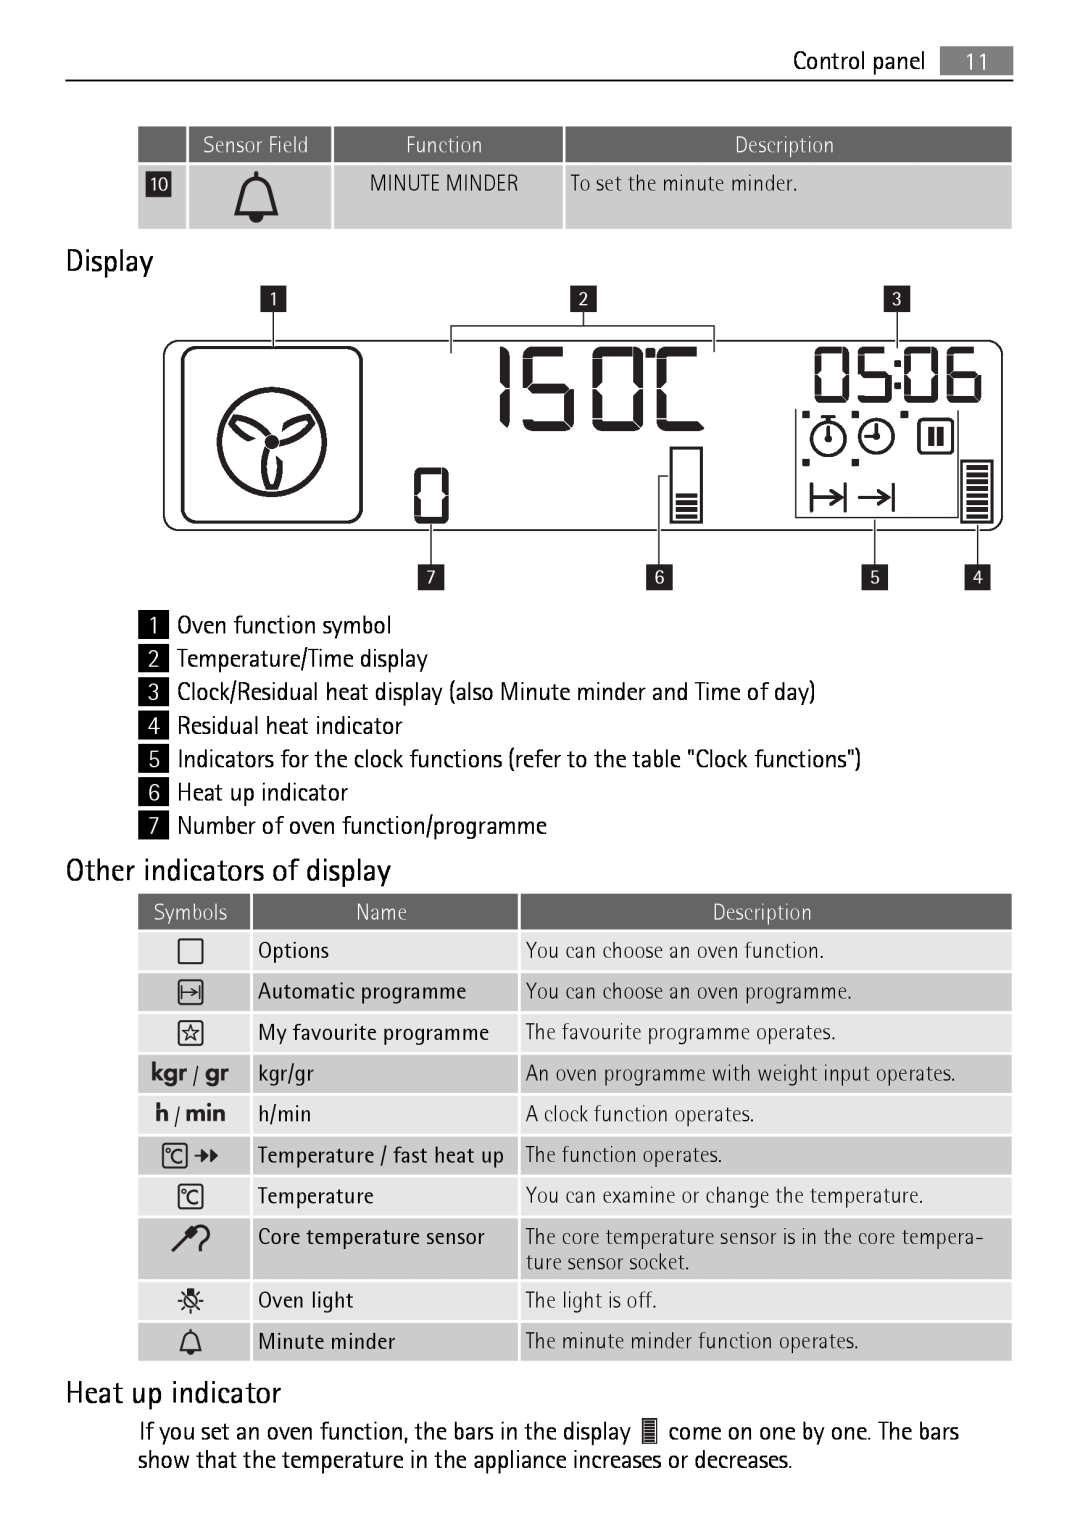 AEG BS7304001 Display, Other indicators of display, Heat up indicator, Sensor Field, Function, Description, Symbols, Name 